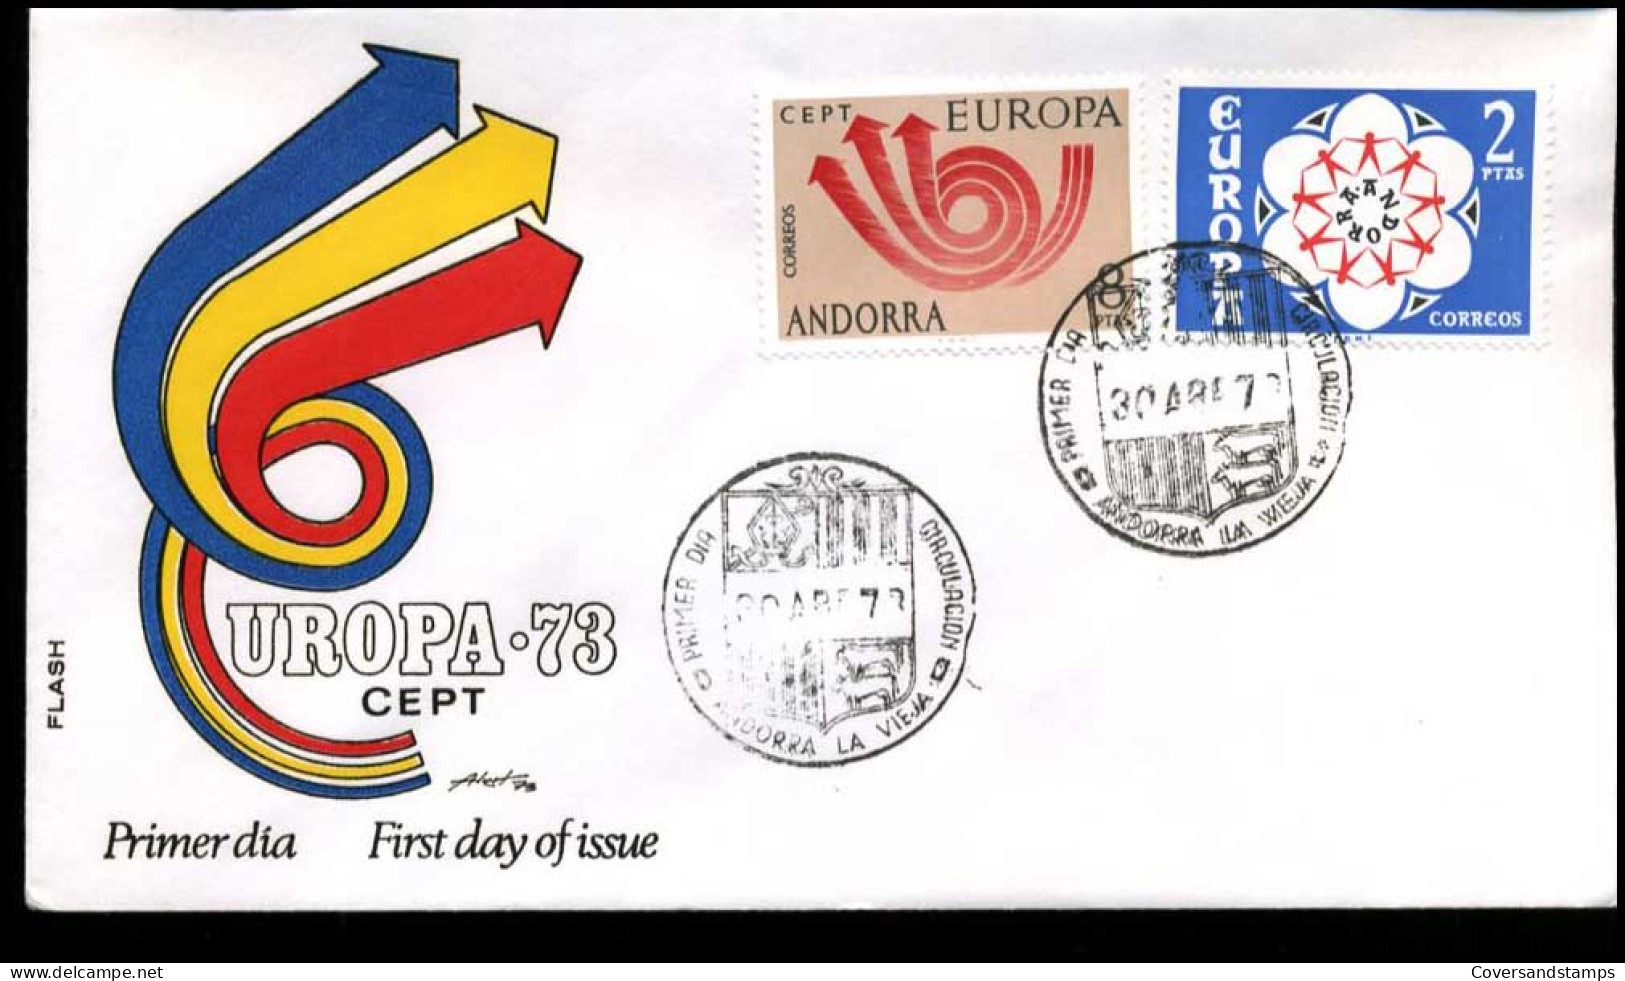  Spaans Andorra - FDC - Europa CEPT 1973 - 1973